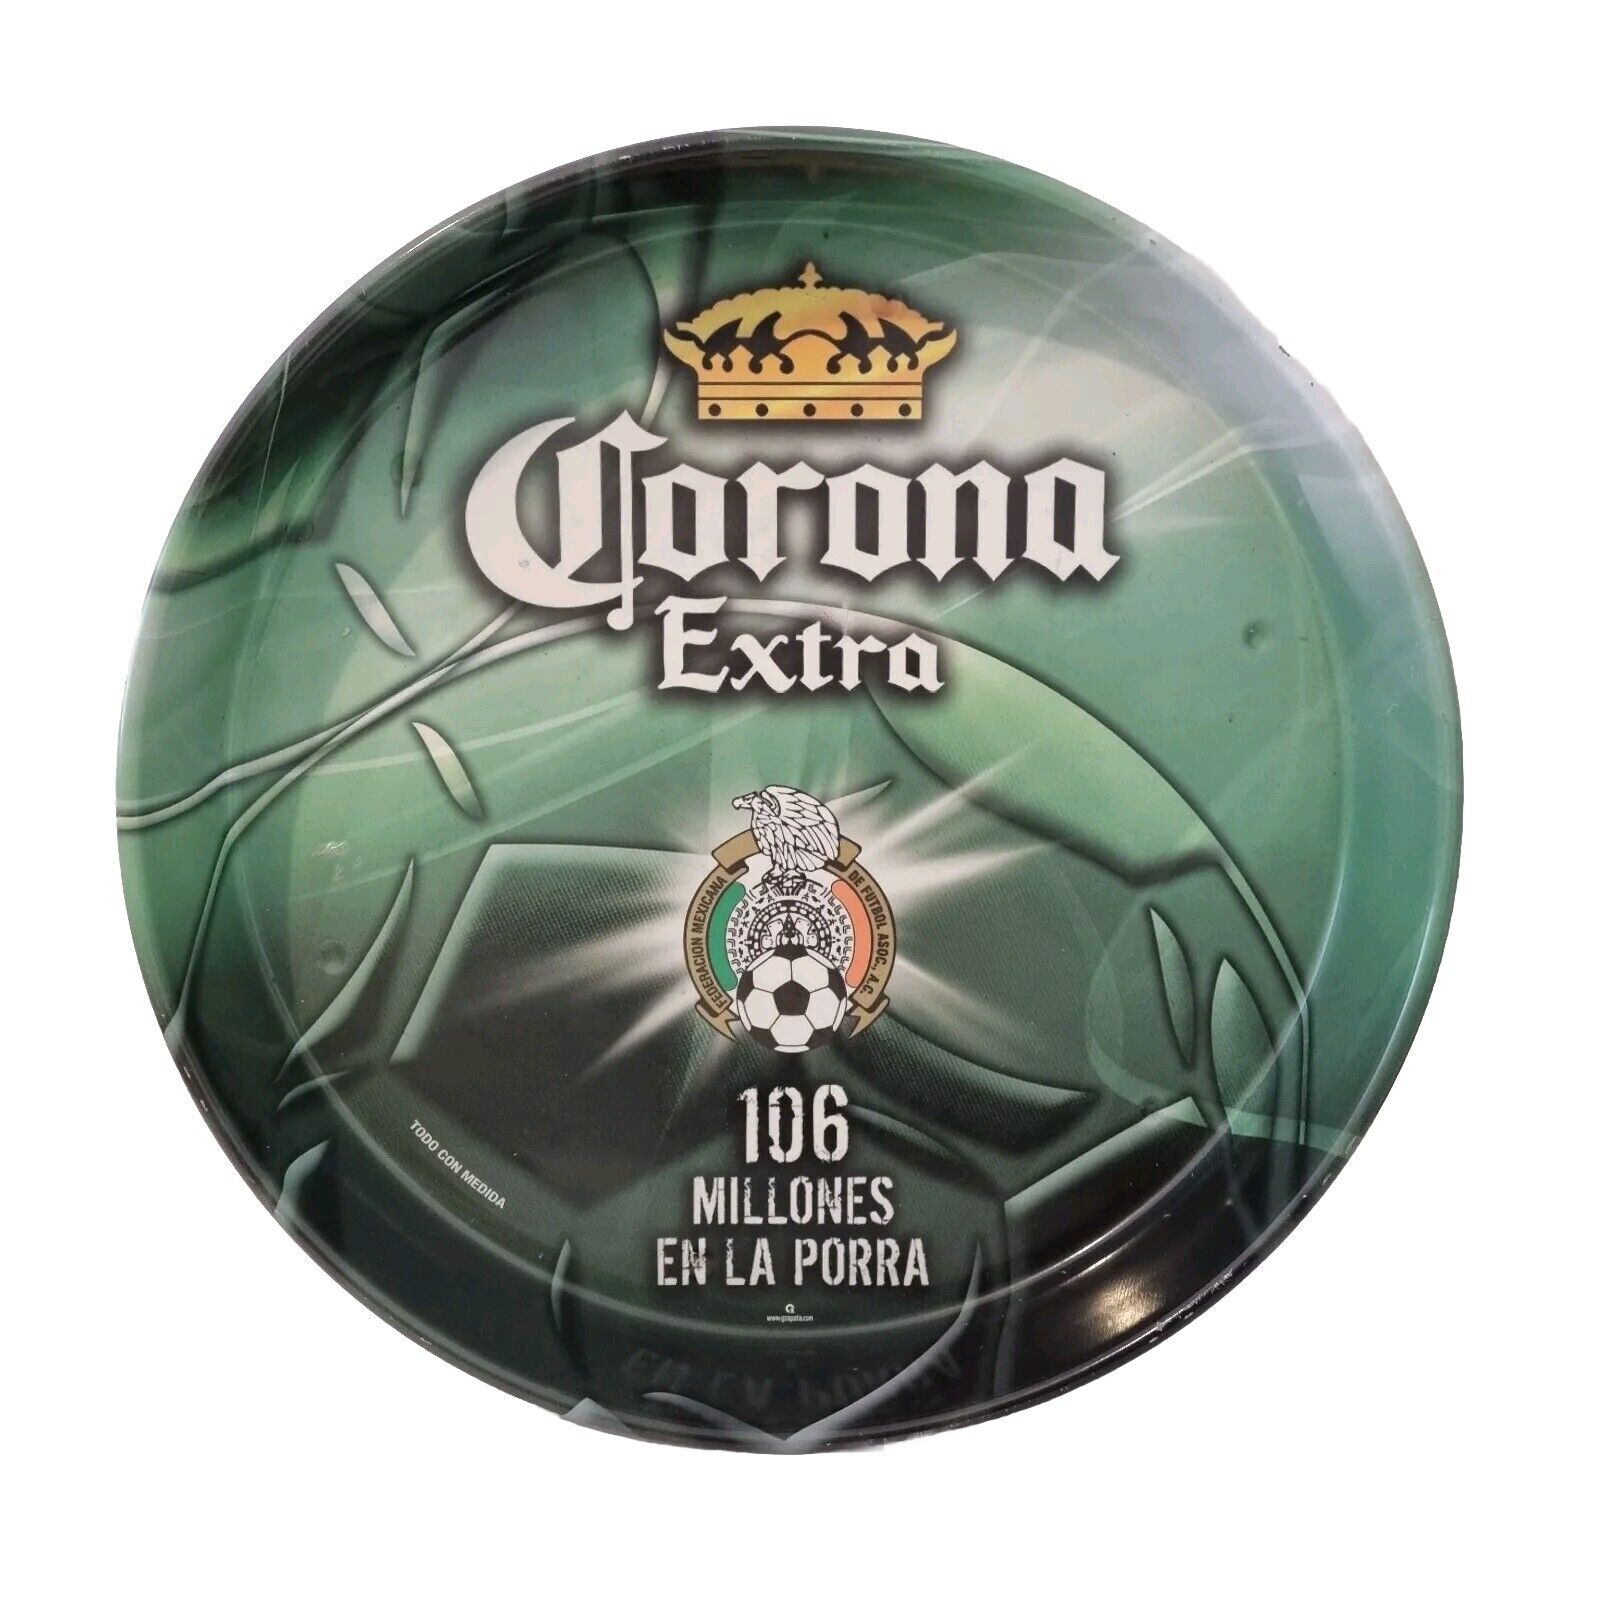 Corona Extra Metal Serving Beer Drinks Tray Green Football Soccer Man Cave Bar 